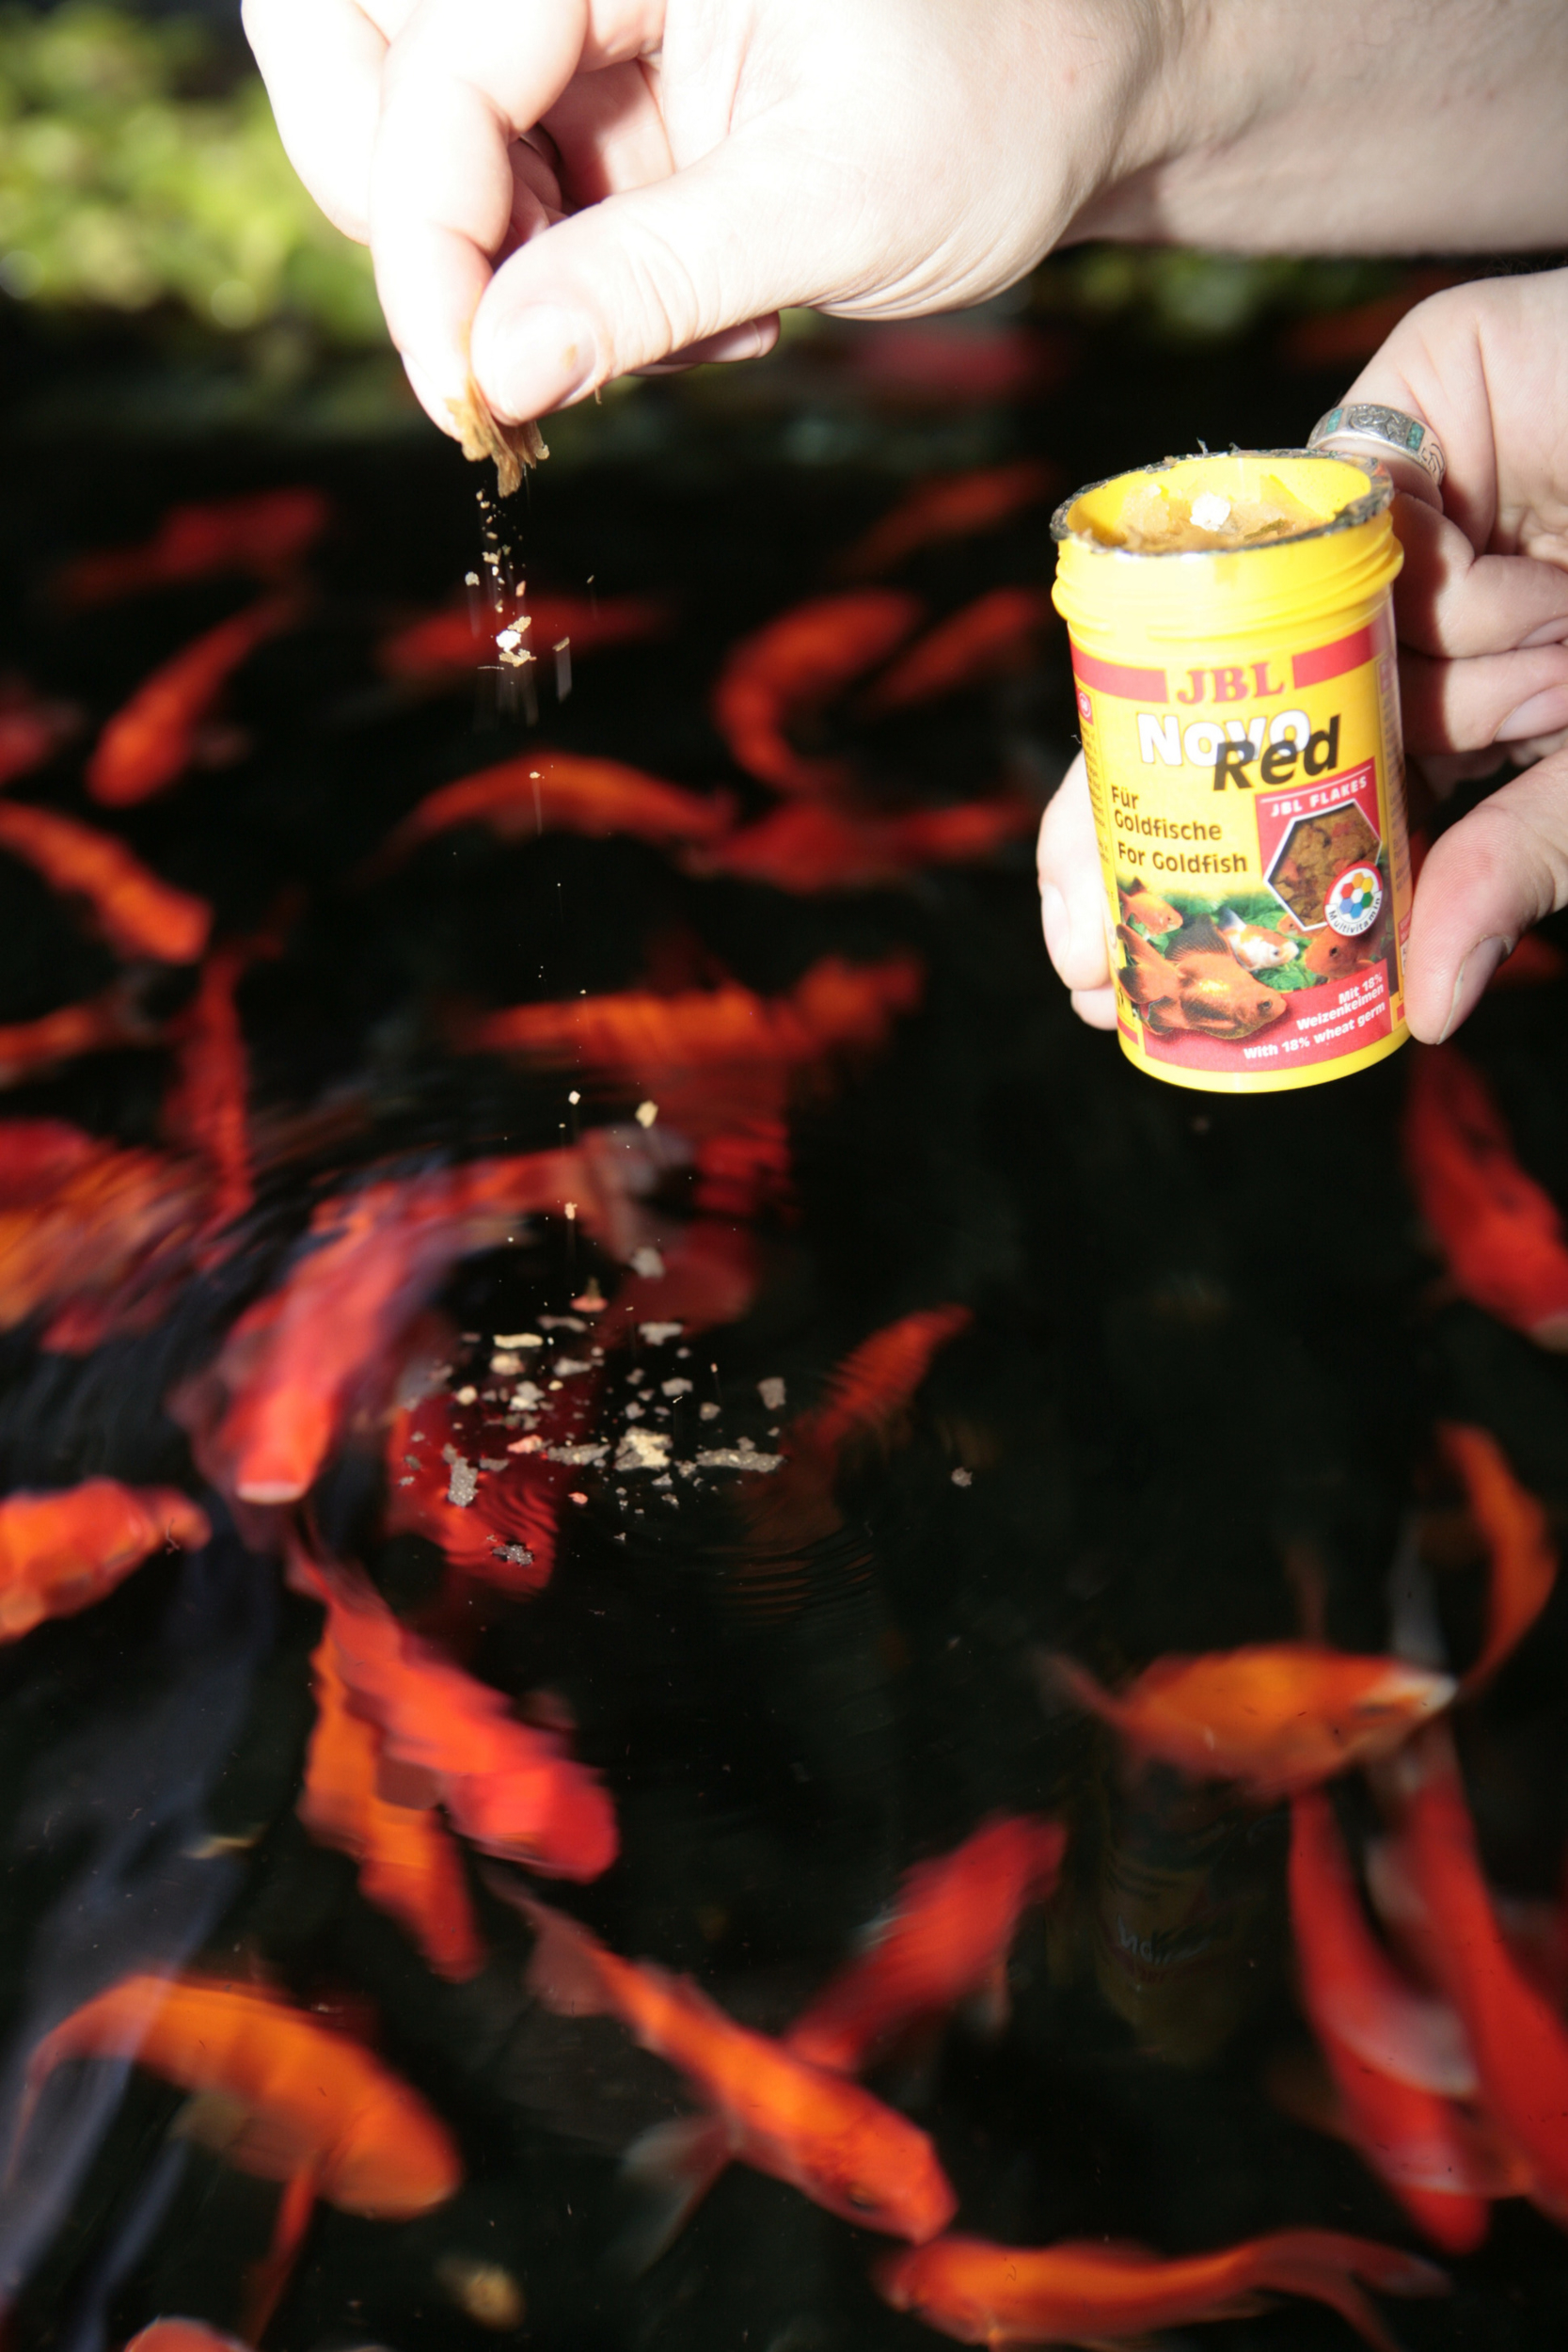 Recharge nourriture pour poisson rouge Novored - JBL - 160 gr JBL